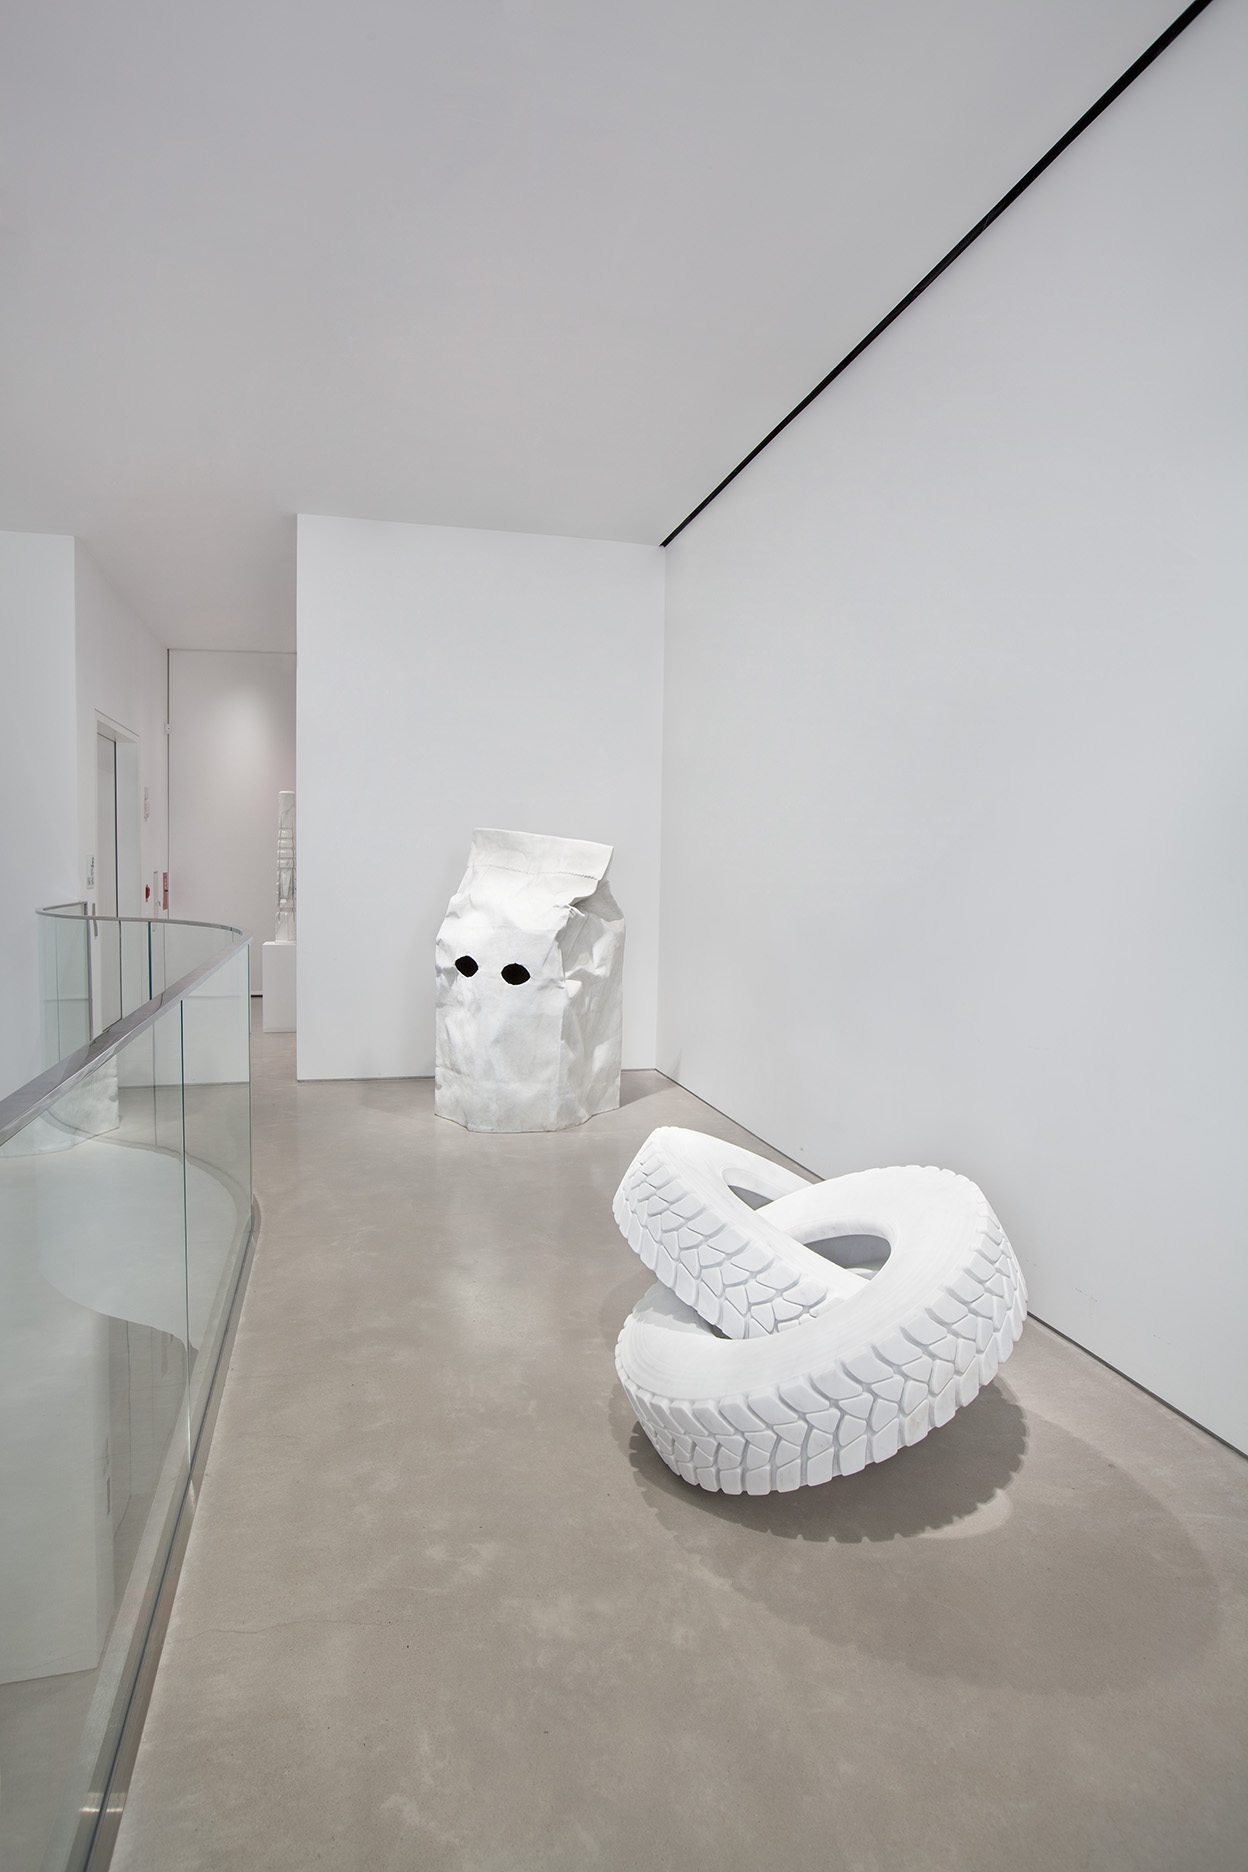 infinite fabio viale marmo marble sperone westwater sculpture scultura